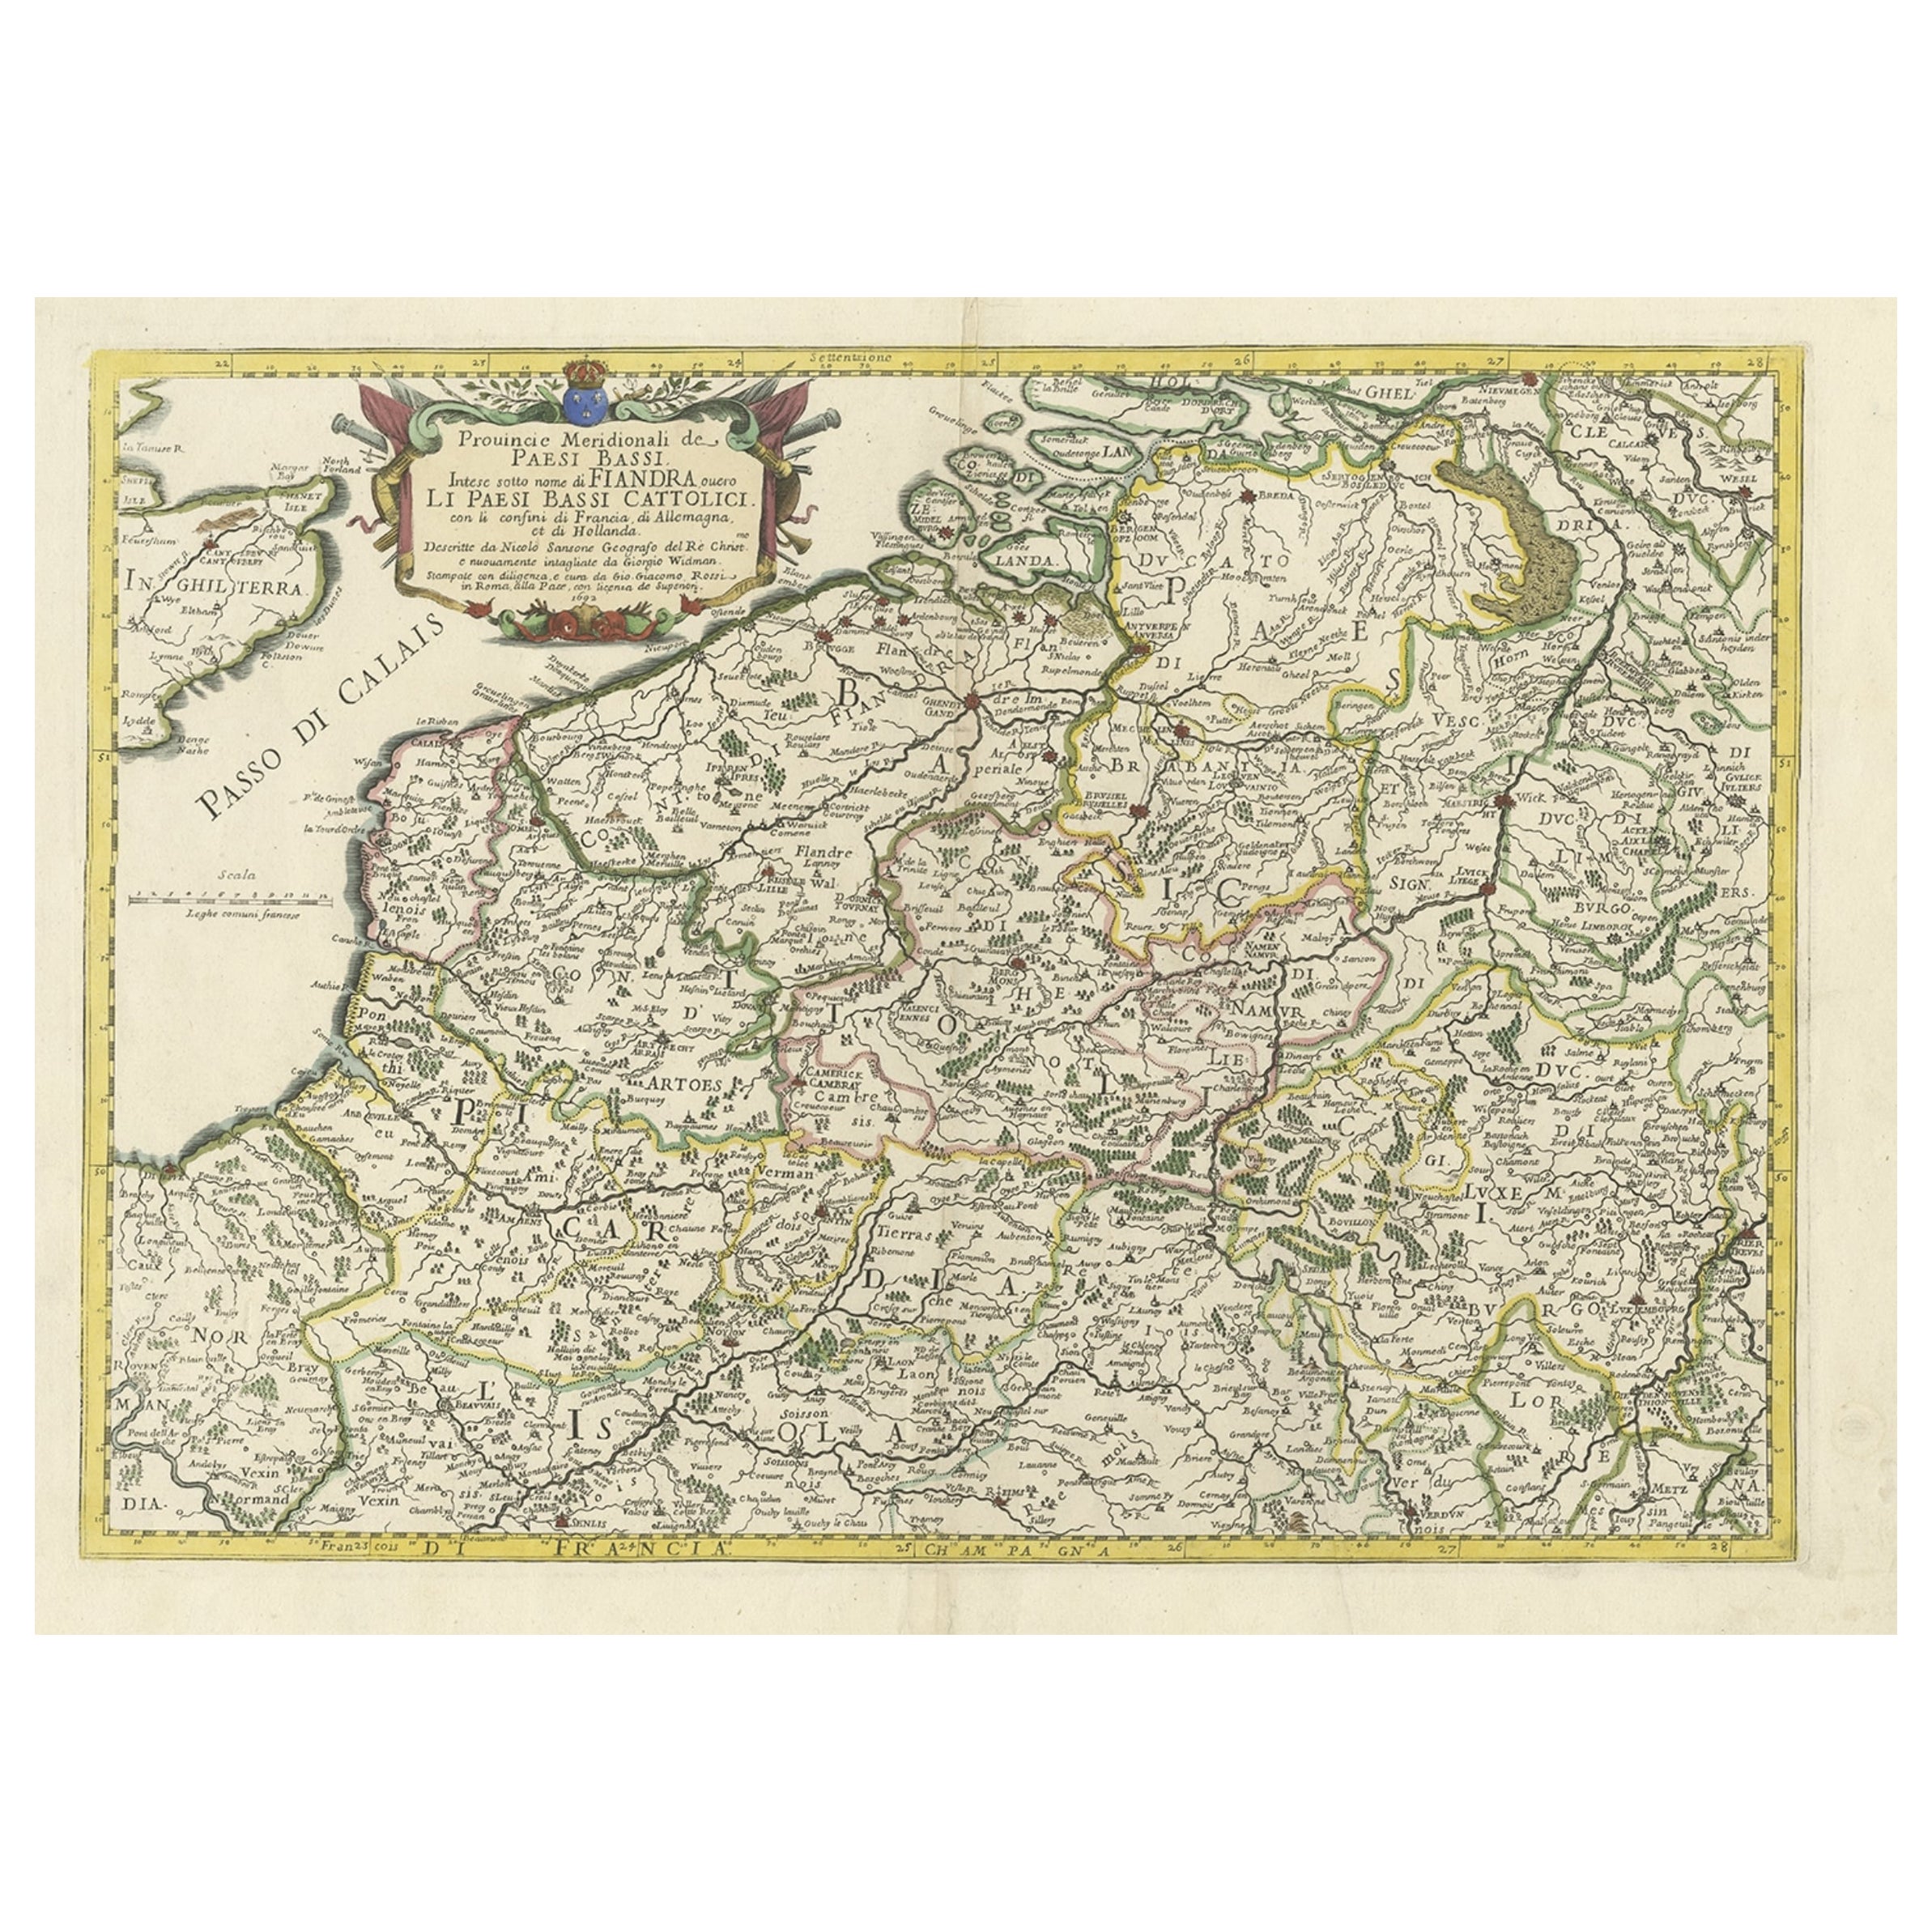 Antique Map of Belgium and Surroundings, 1692